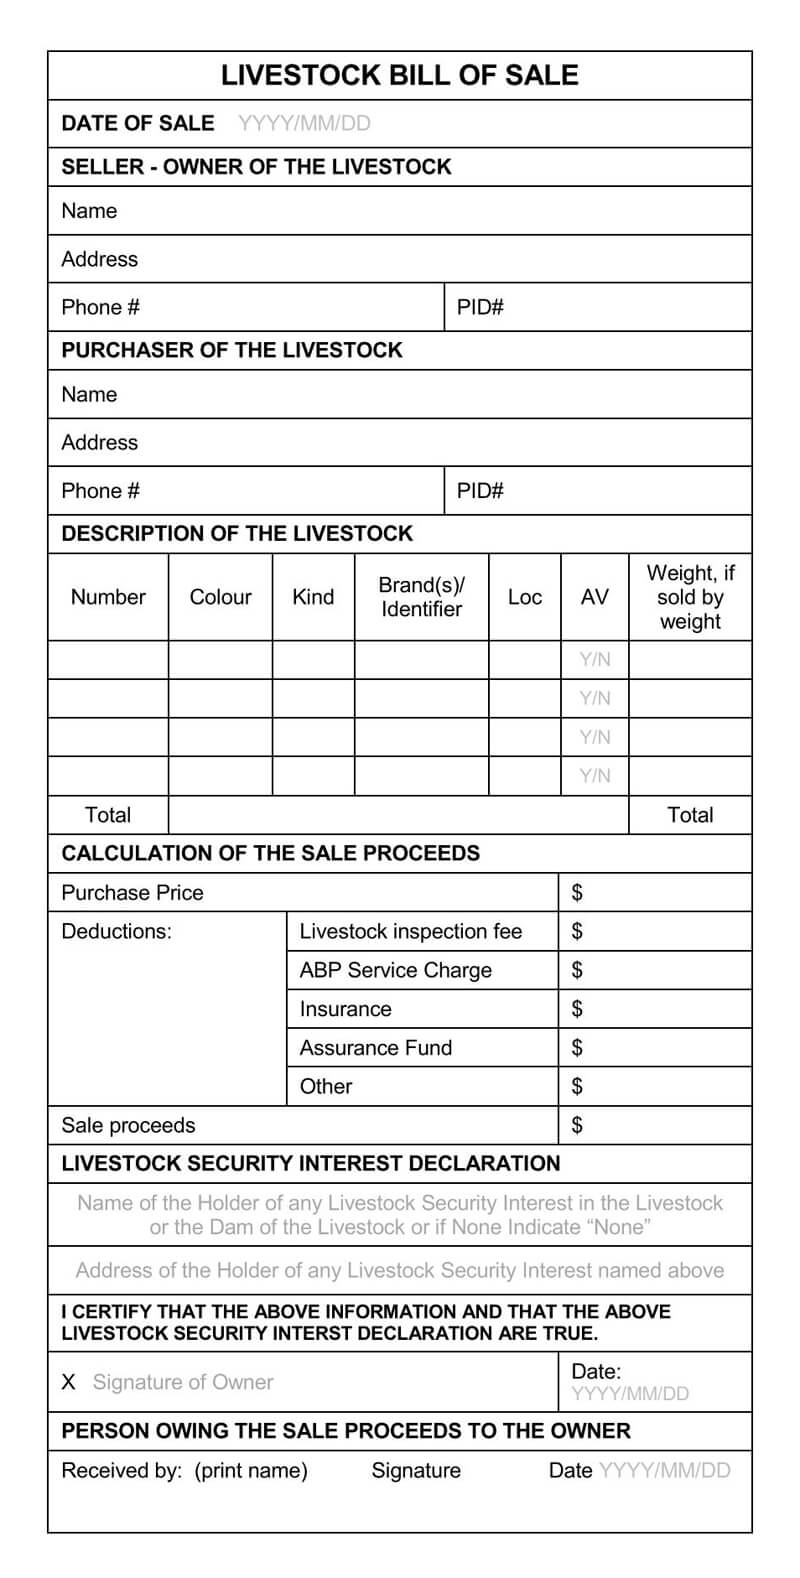 Free Livestock Bill of Sale Form 08